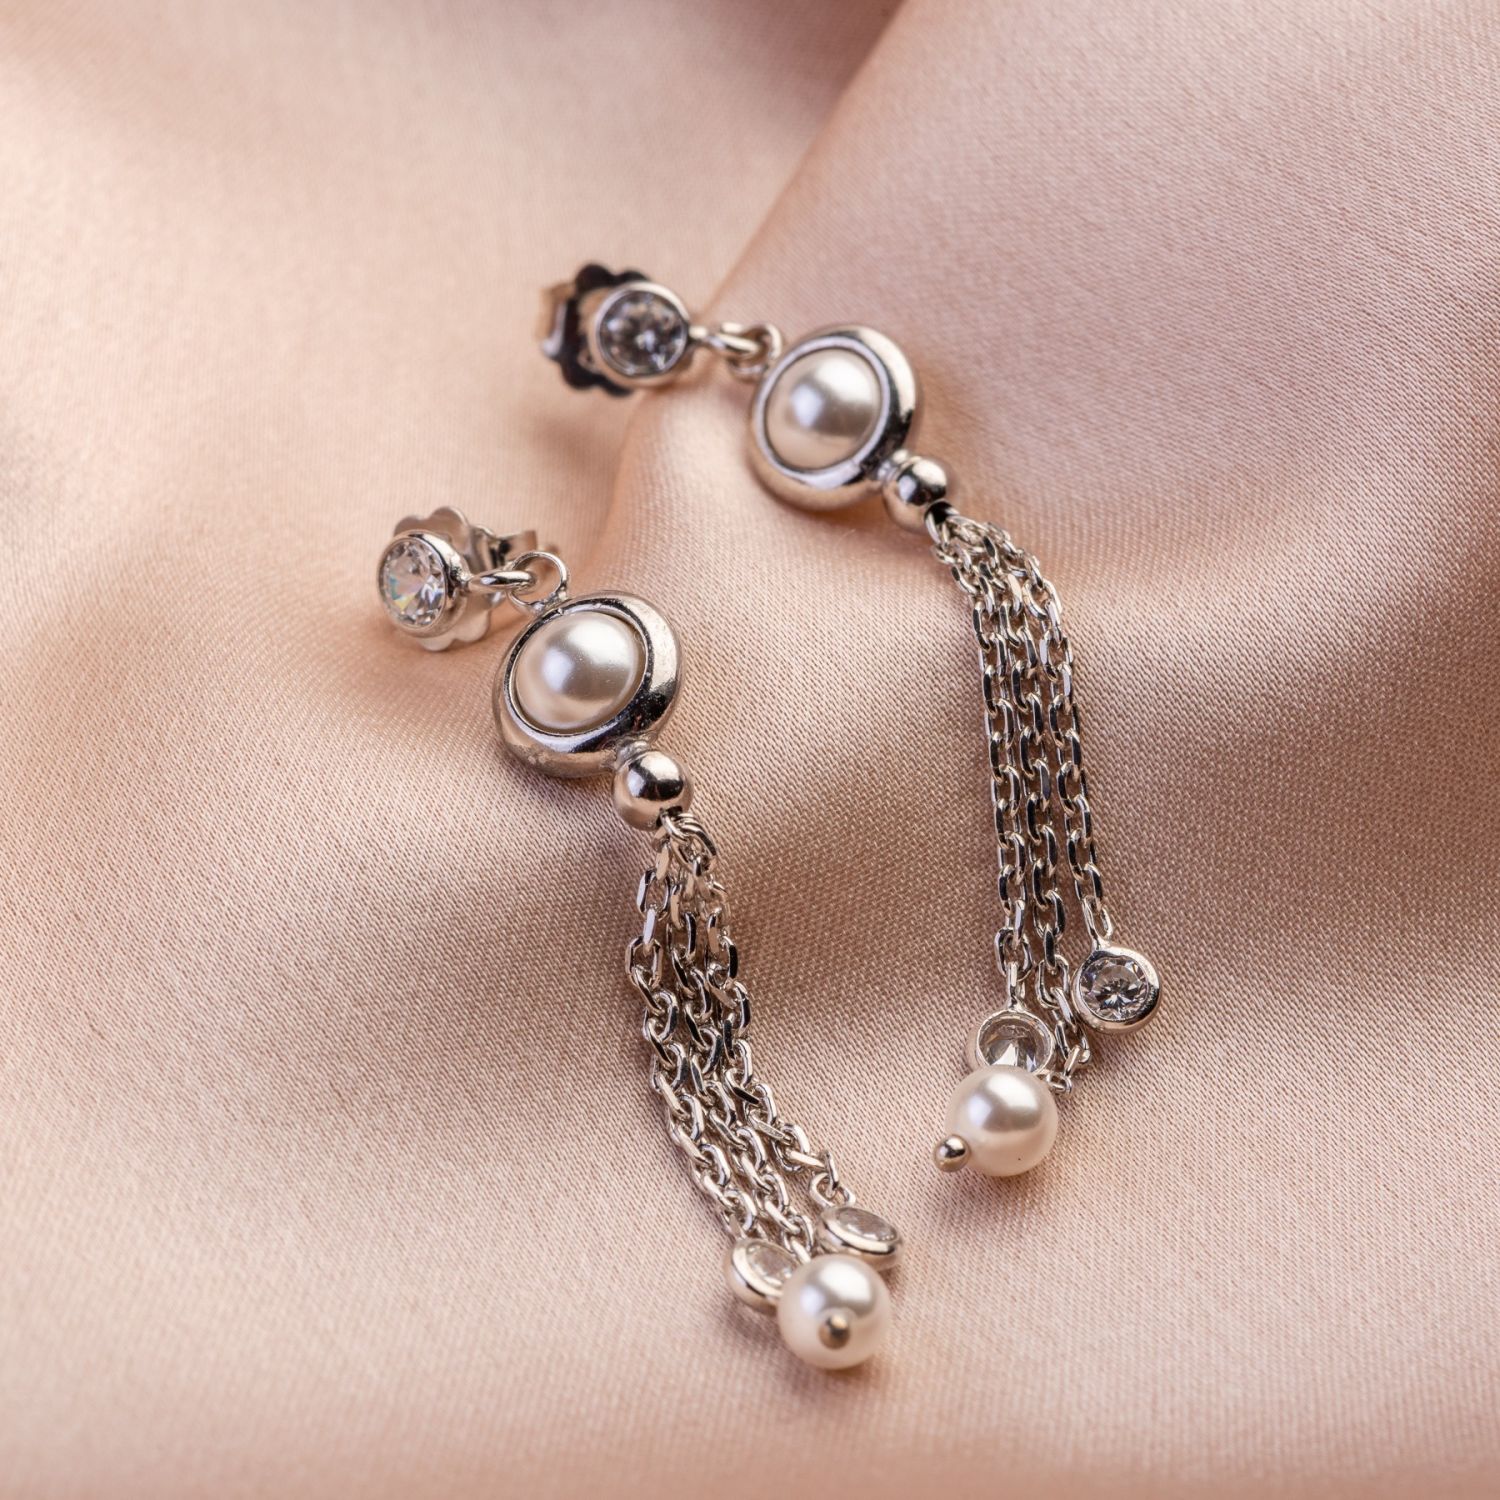 Cocktail Pearls silver earrings